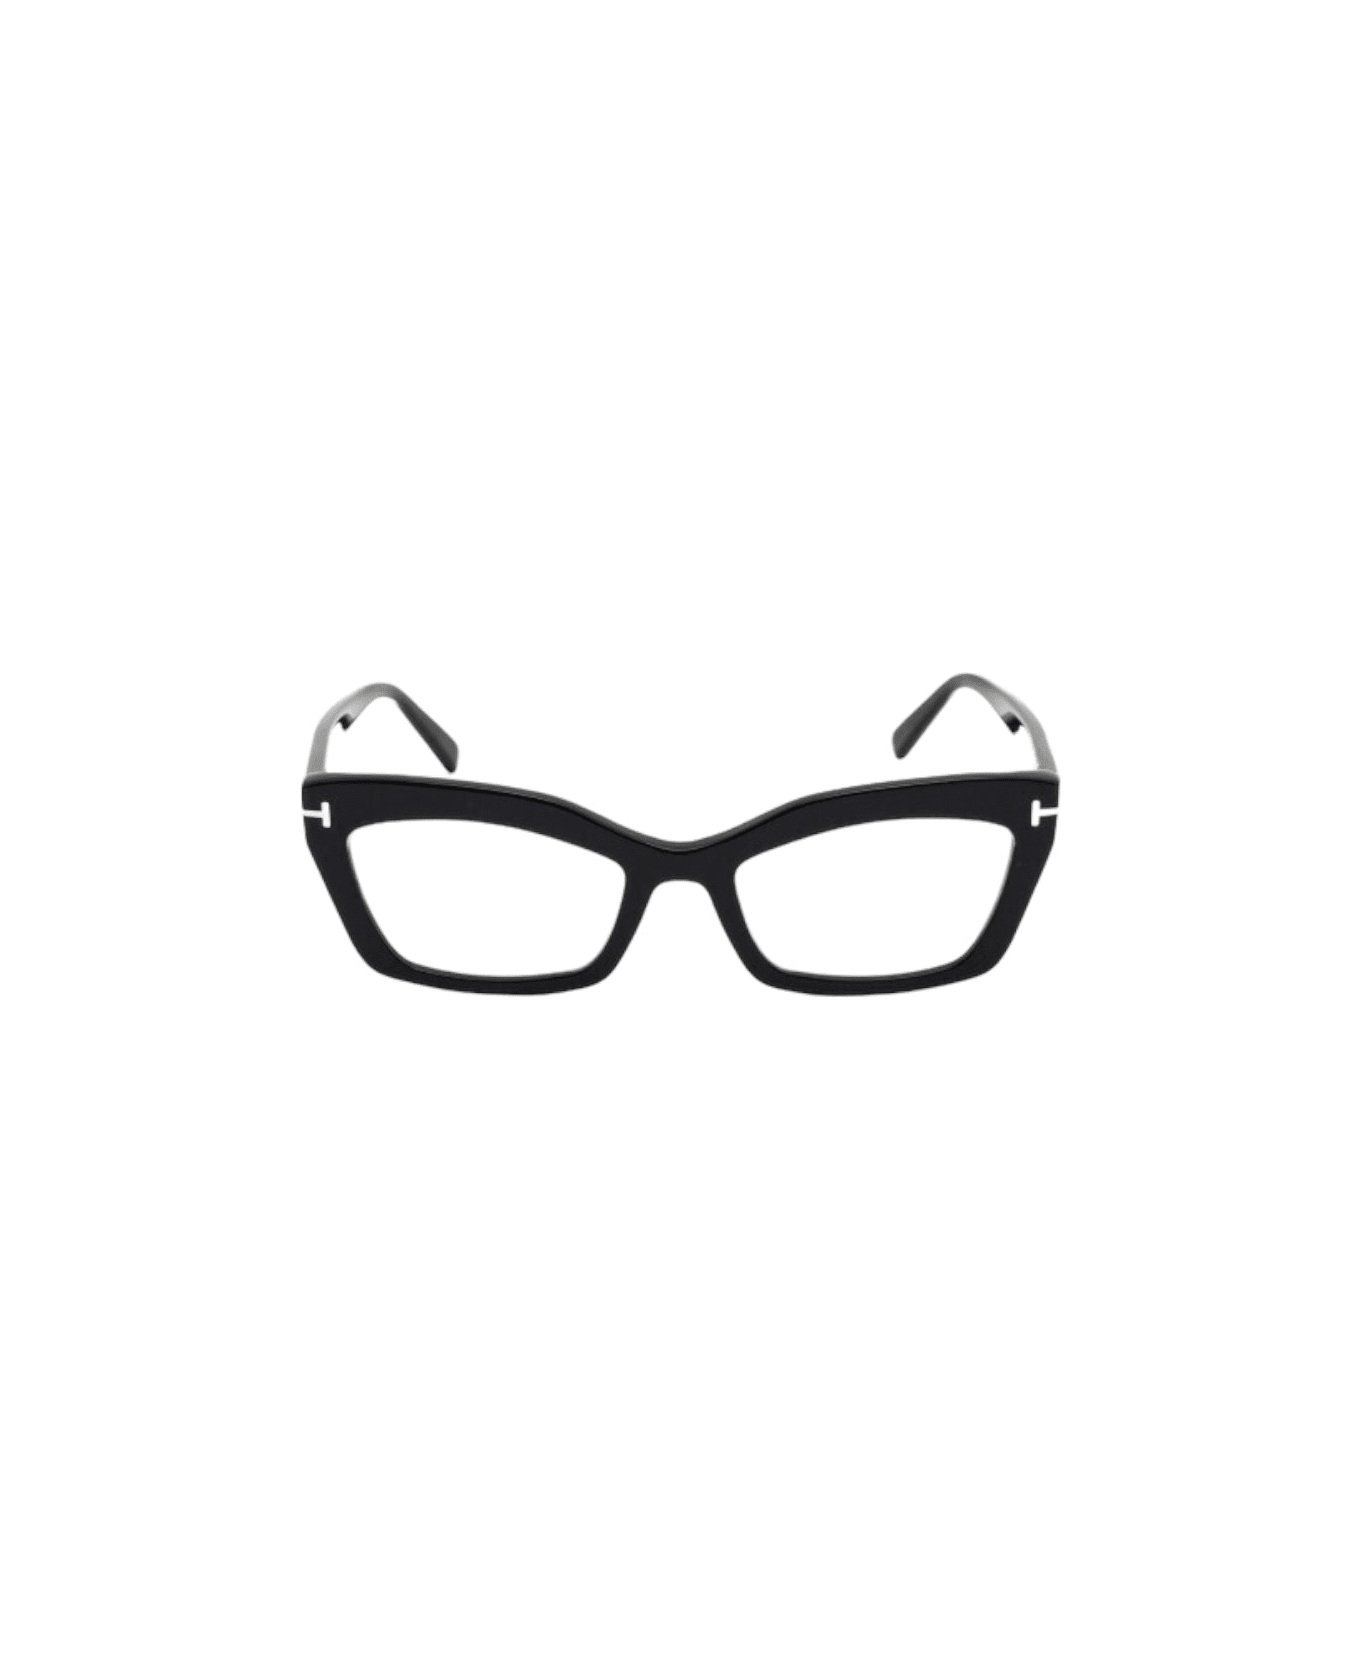 Tom Ford Eyewear Ft5766 - Black Glasses アイウェア